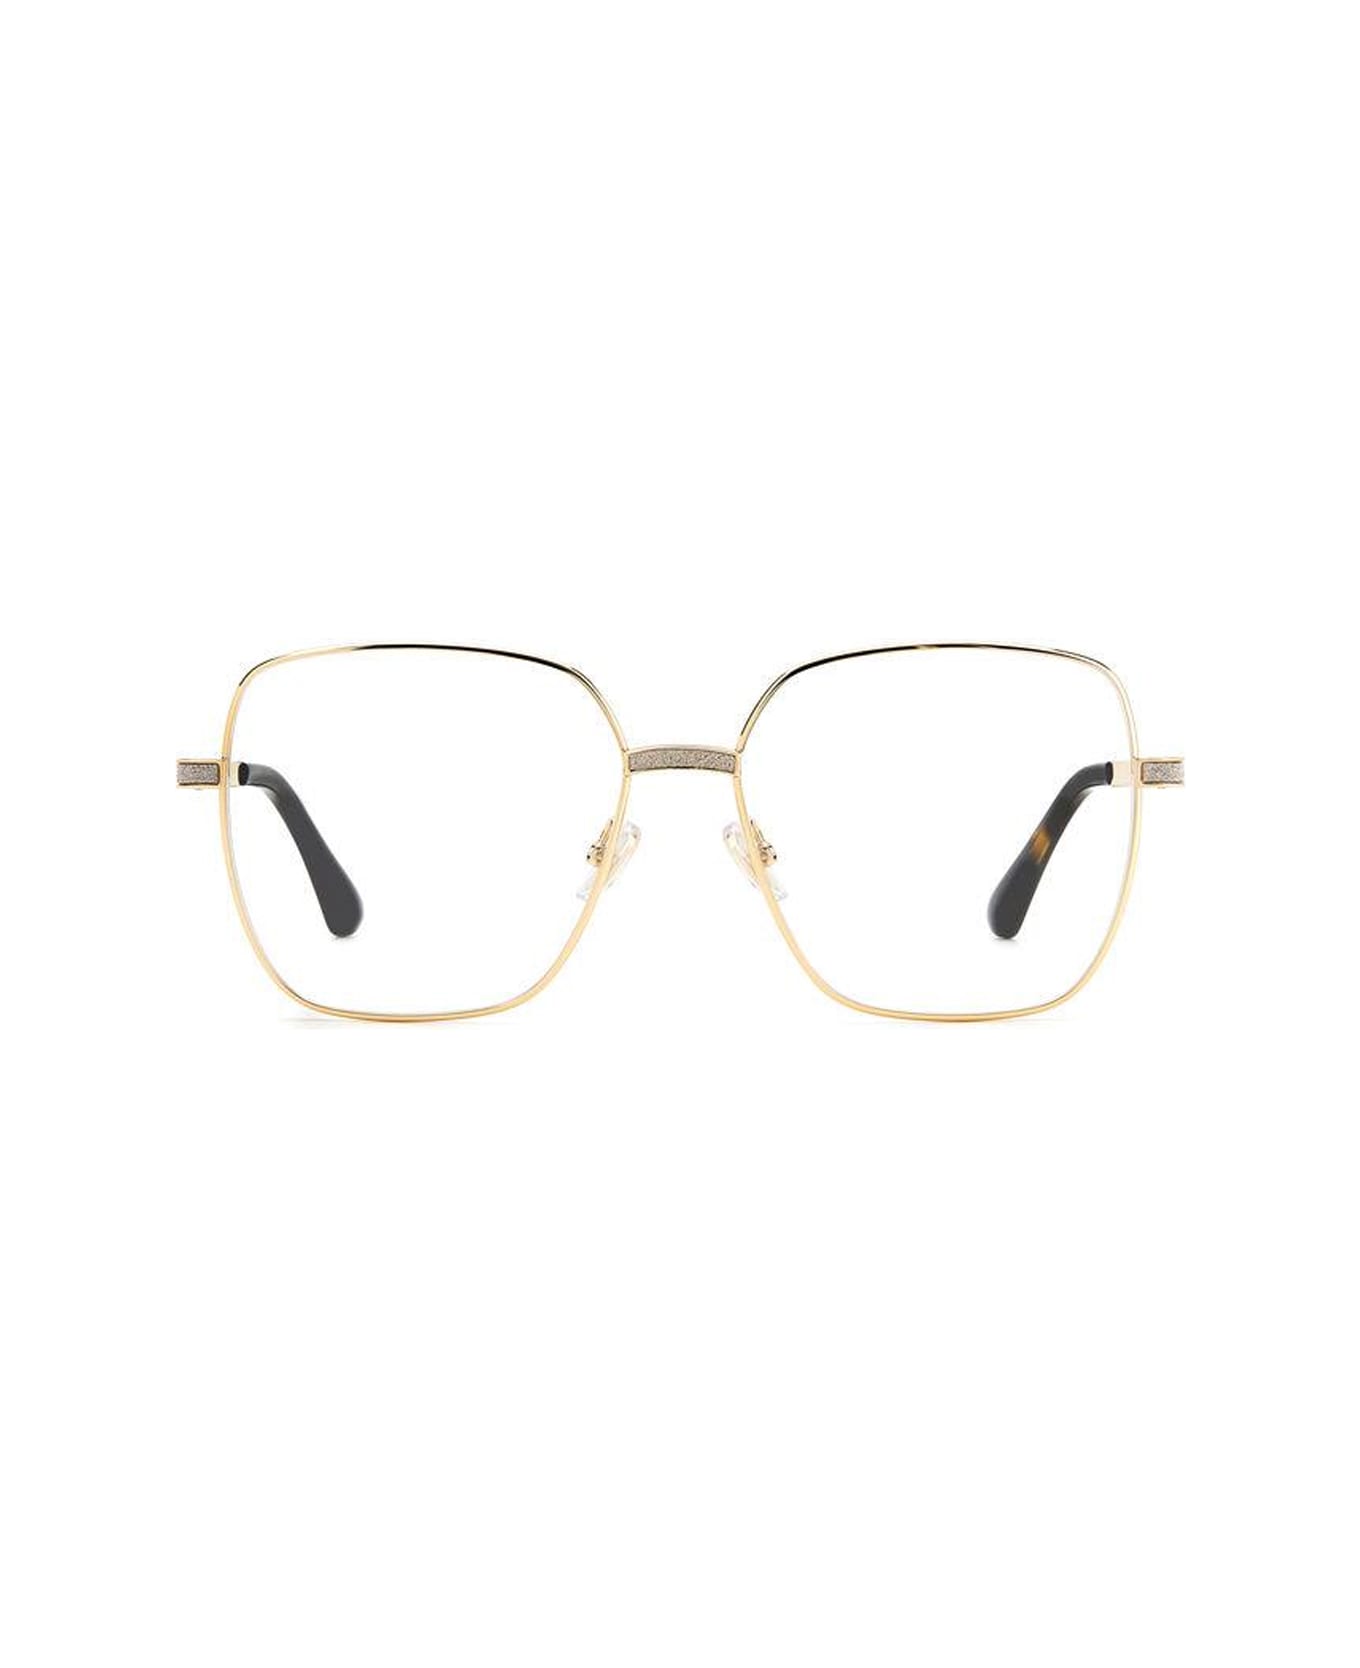 Jimmy Choo Eyewear Jc354 06j/15 Glasses - Oro